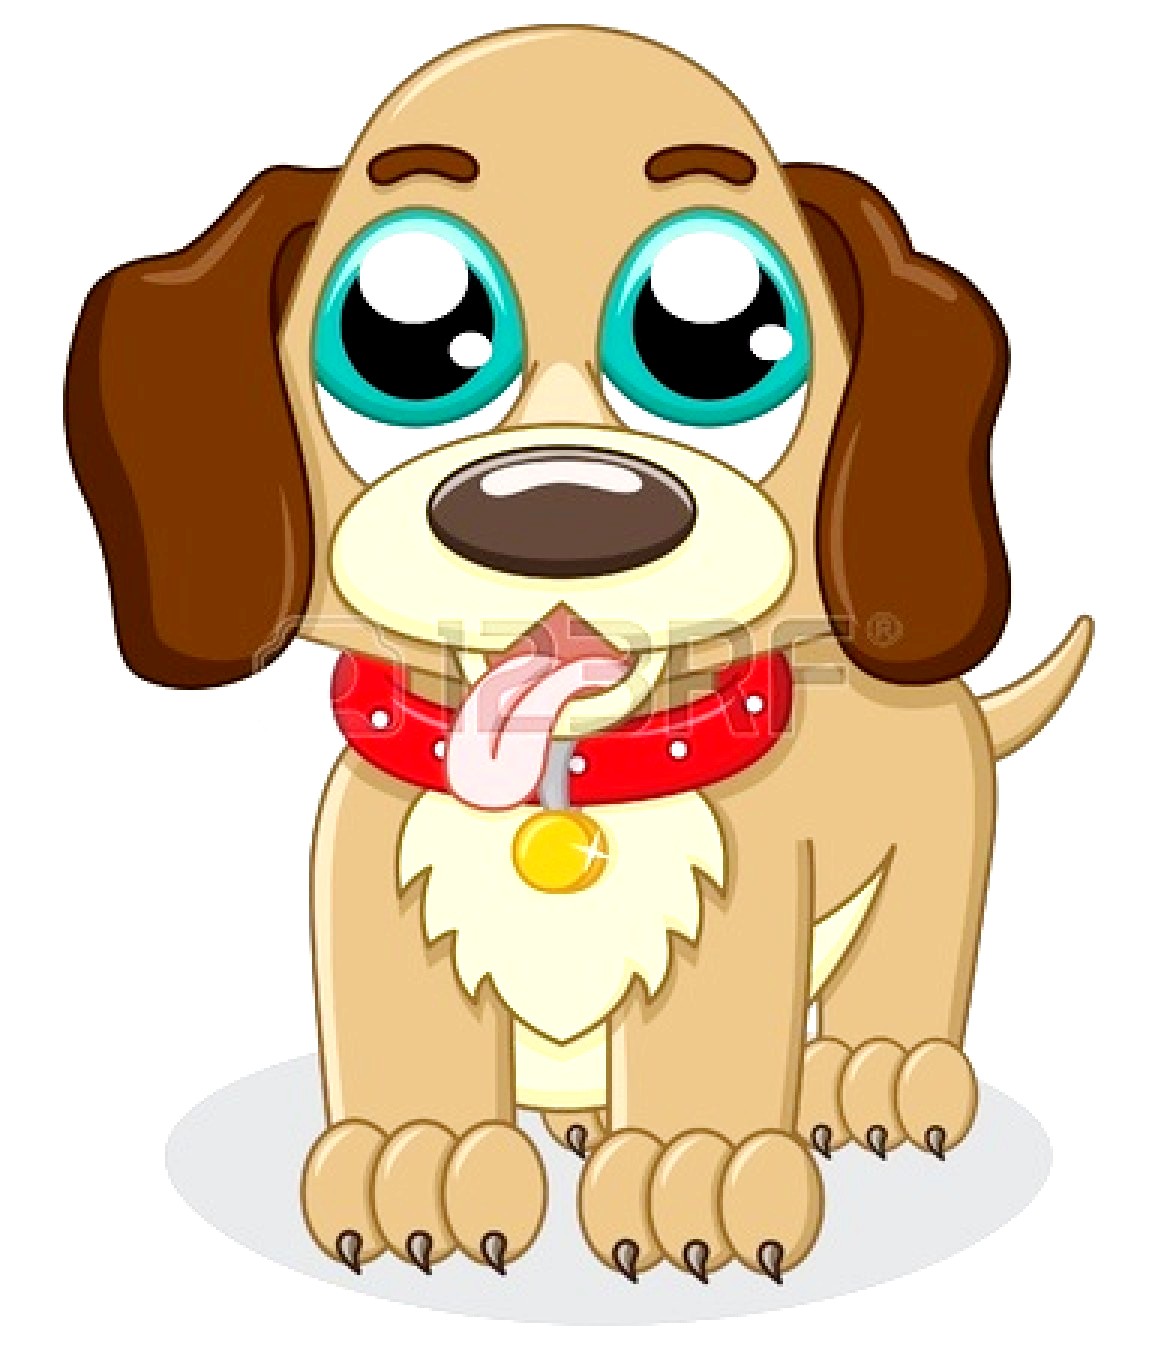 Cute Puppy Cartoon | Free Images at Clker.com - vector clip art online